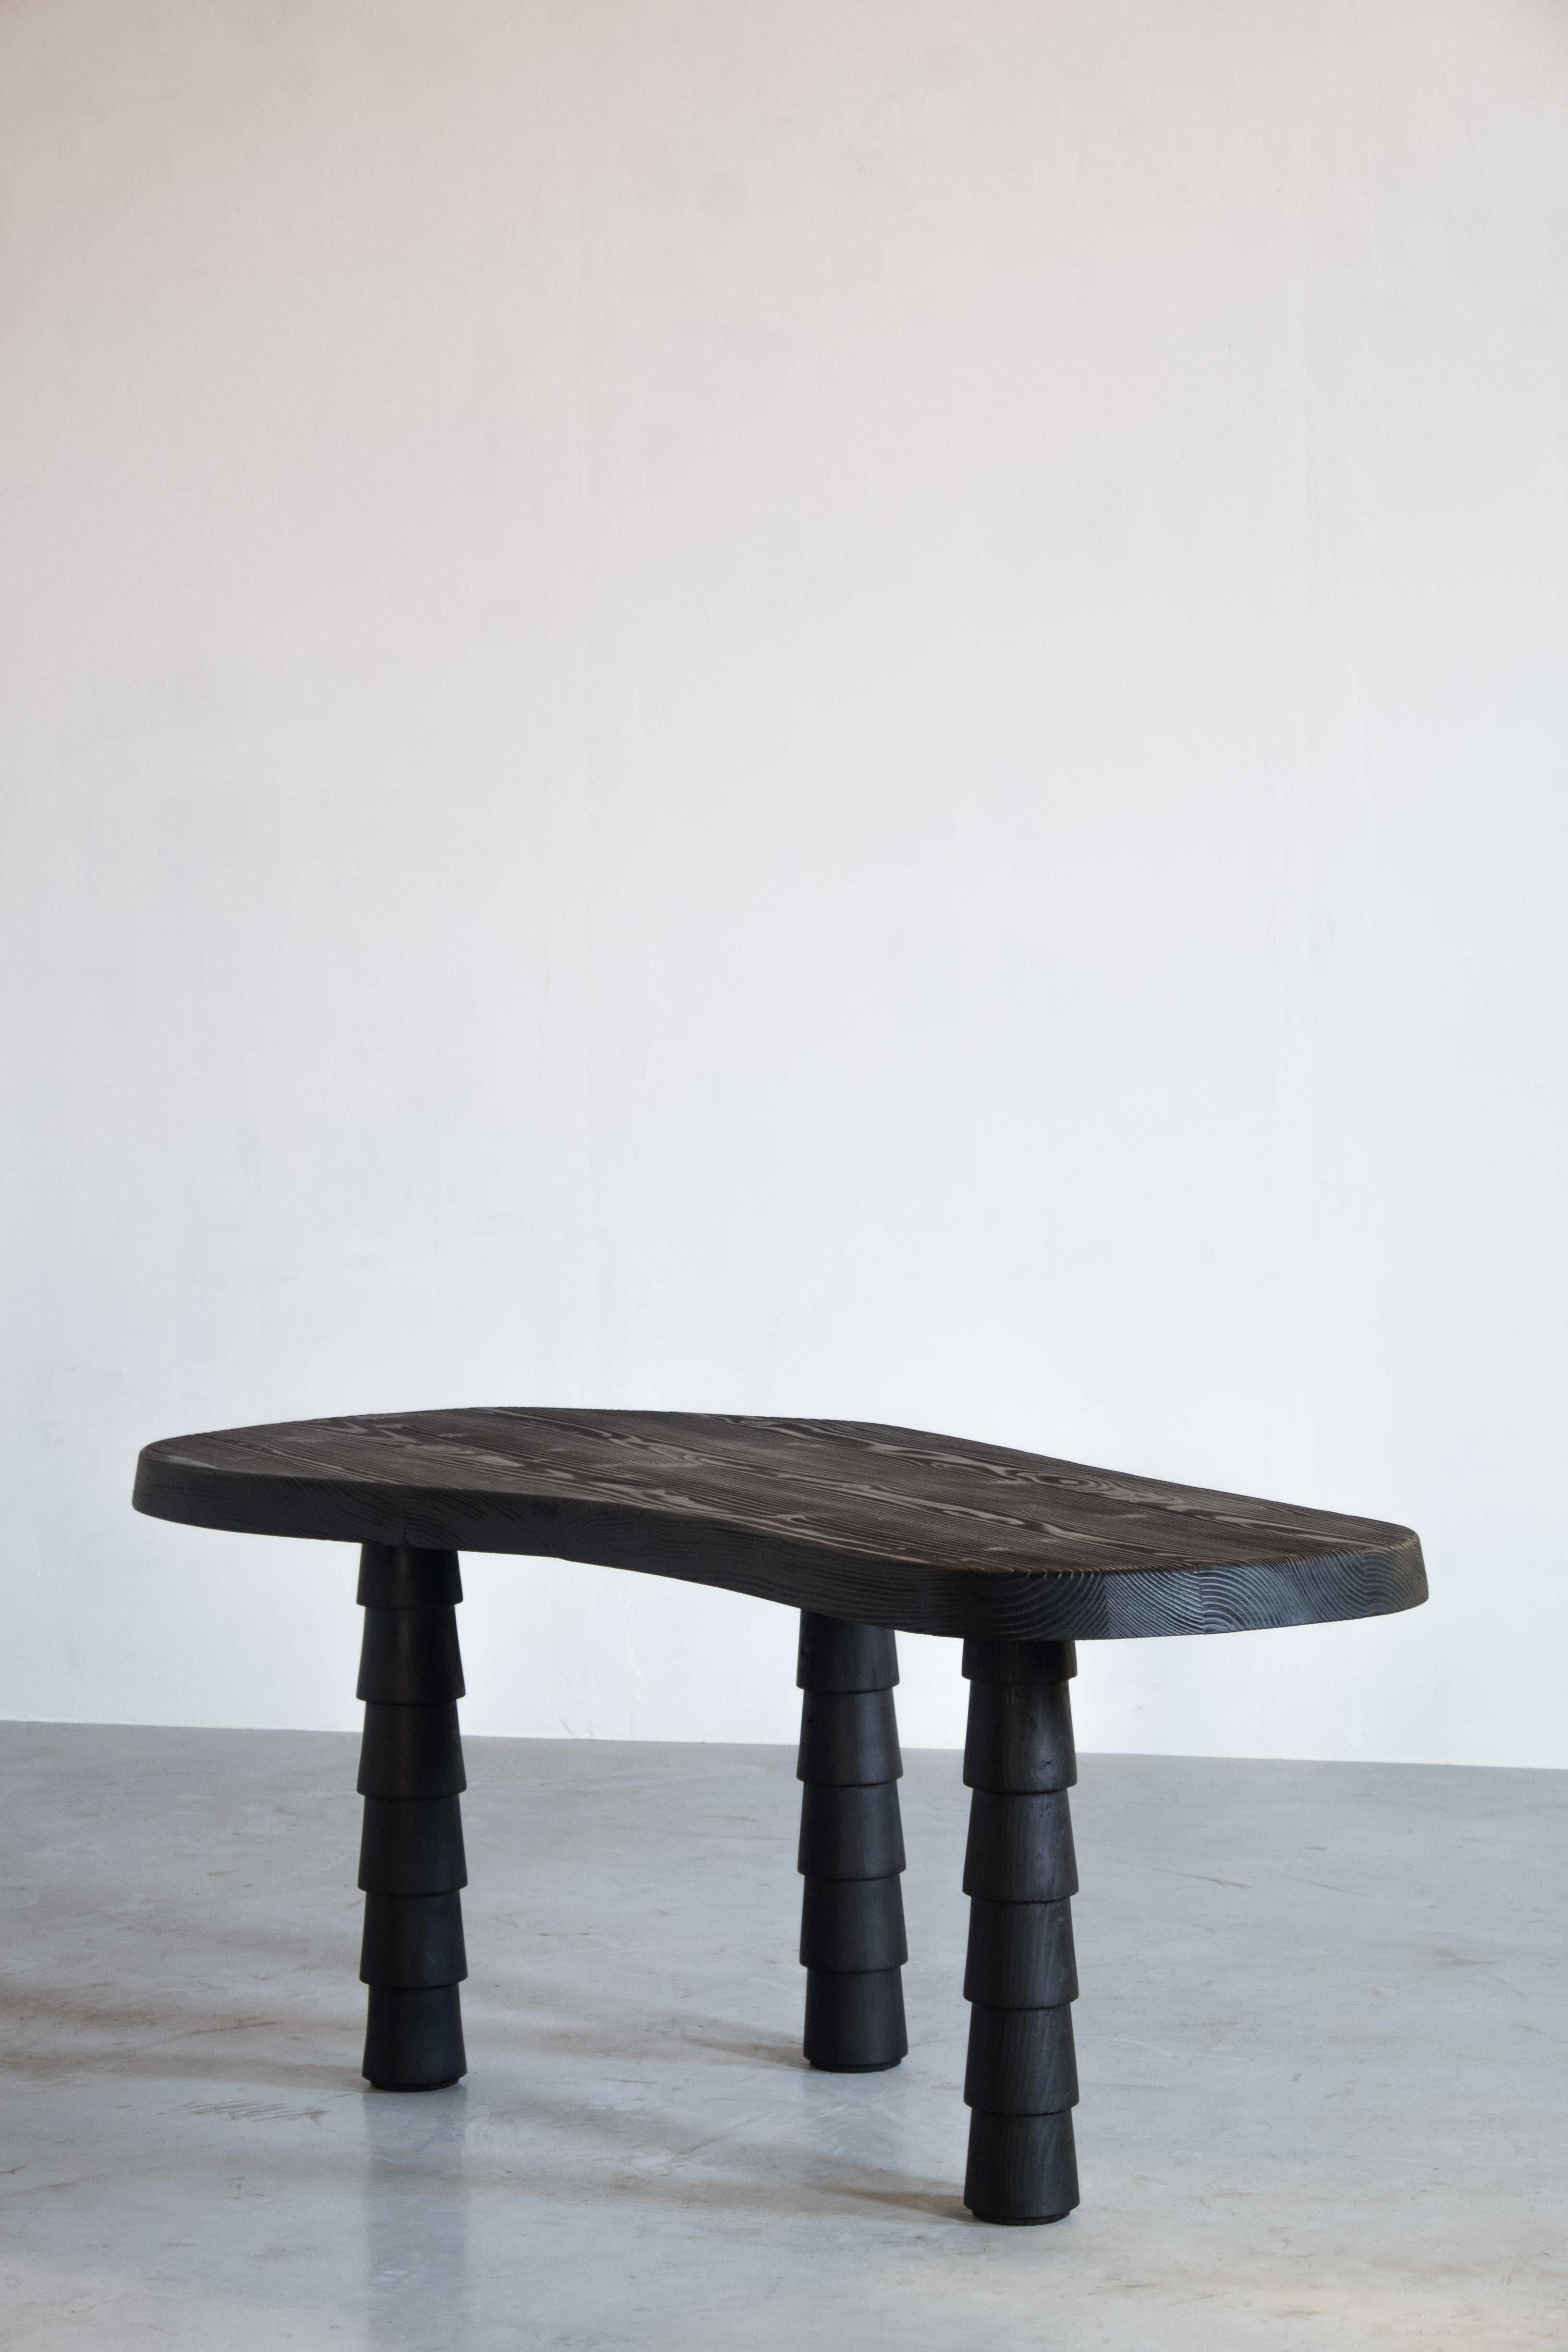 Belgian Black Data Table Three Legged in Oregon by Atelier Thomas Serruys For Sale